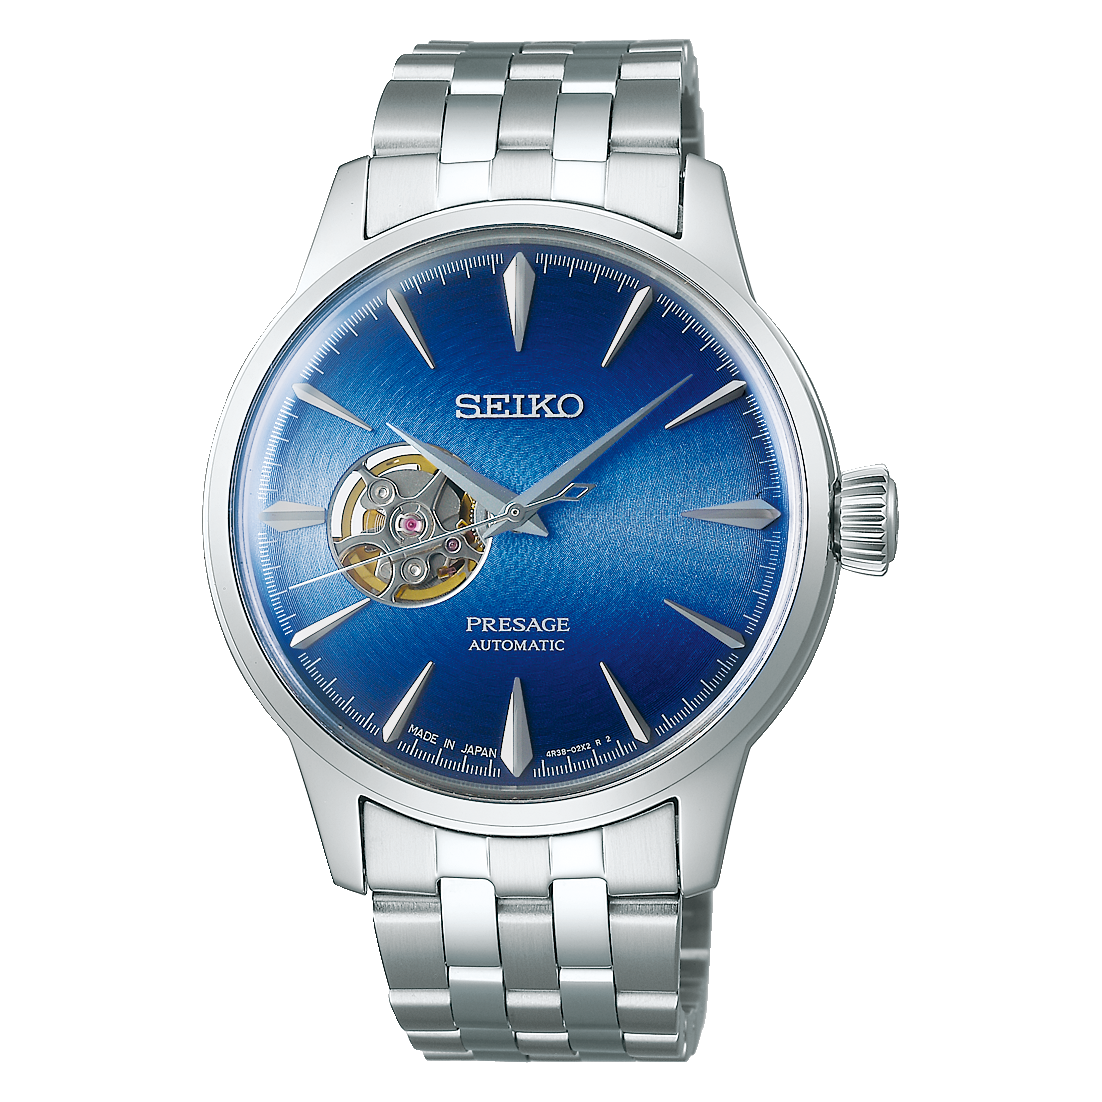 SEIKO PRESAGE AUTOMATIC COCKTAIL TIME "ACAPULCO BLUE" - SSA439J1